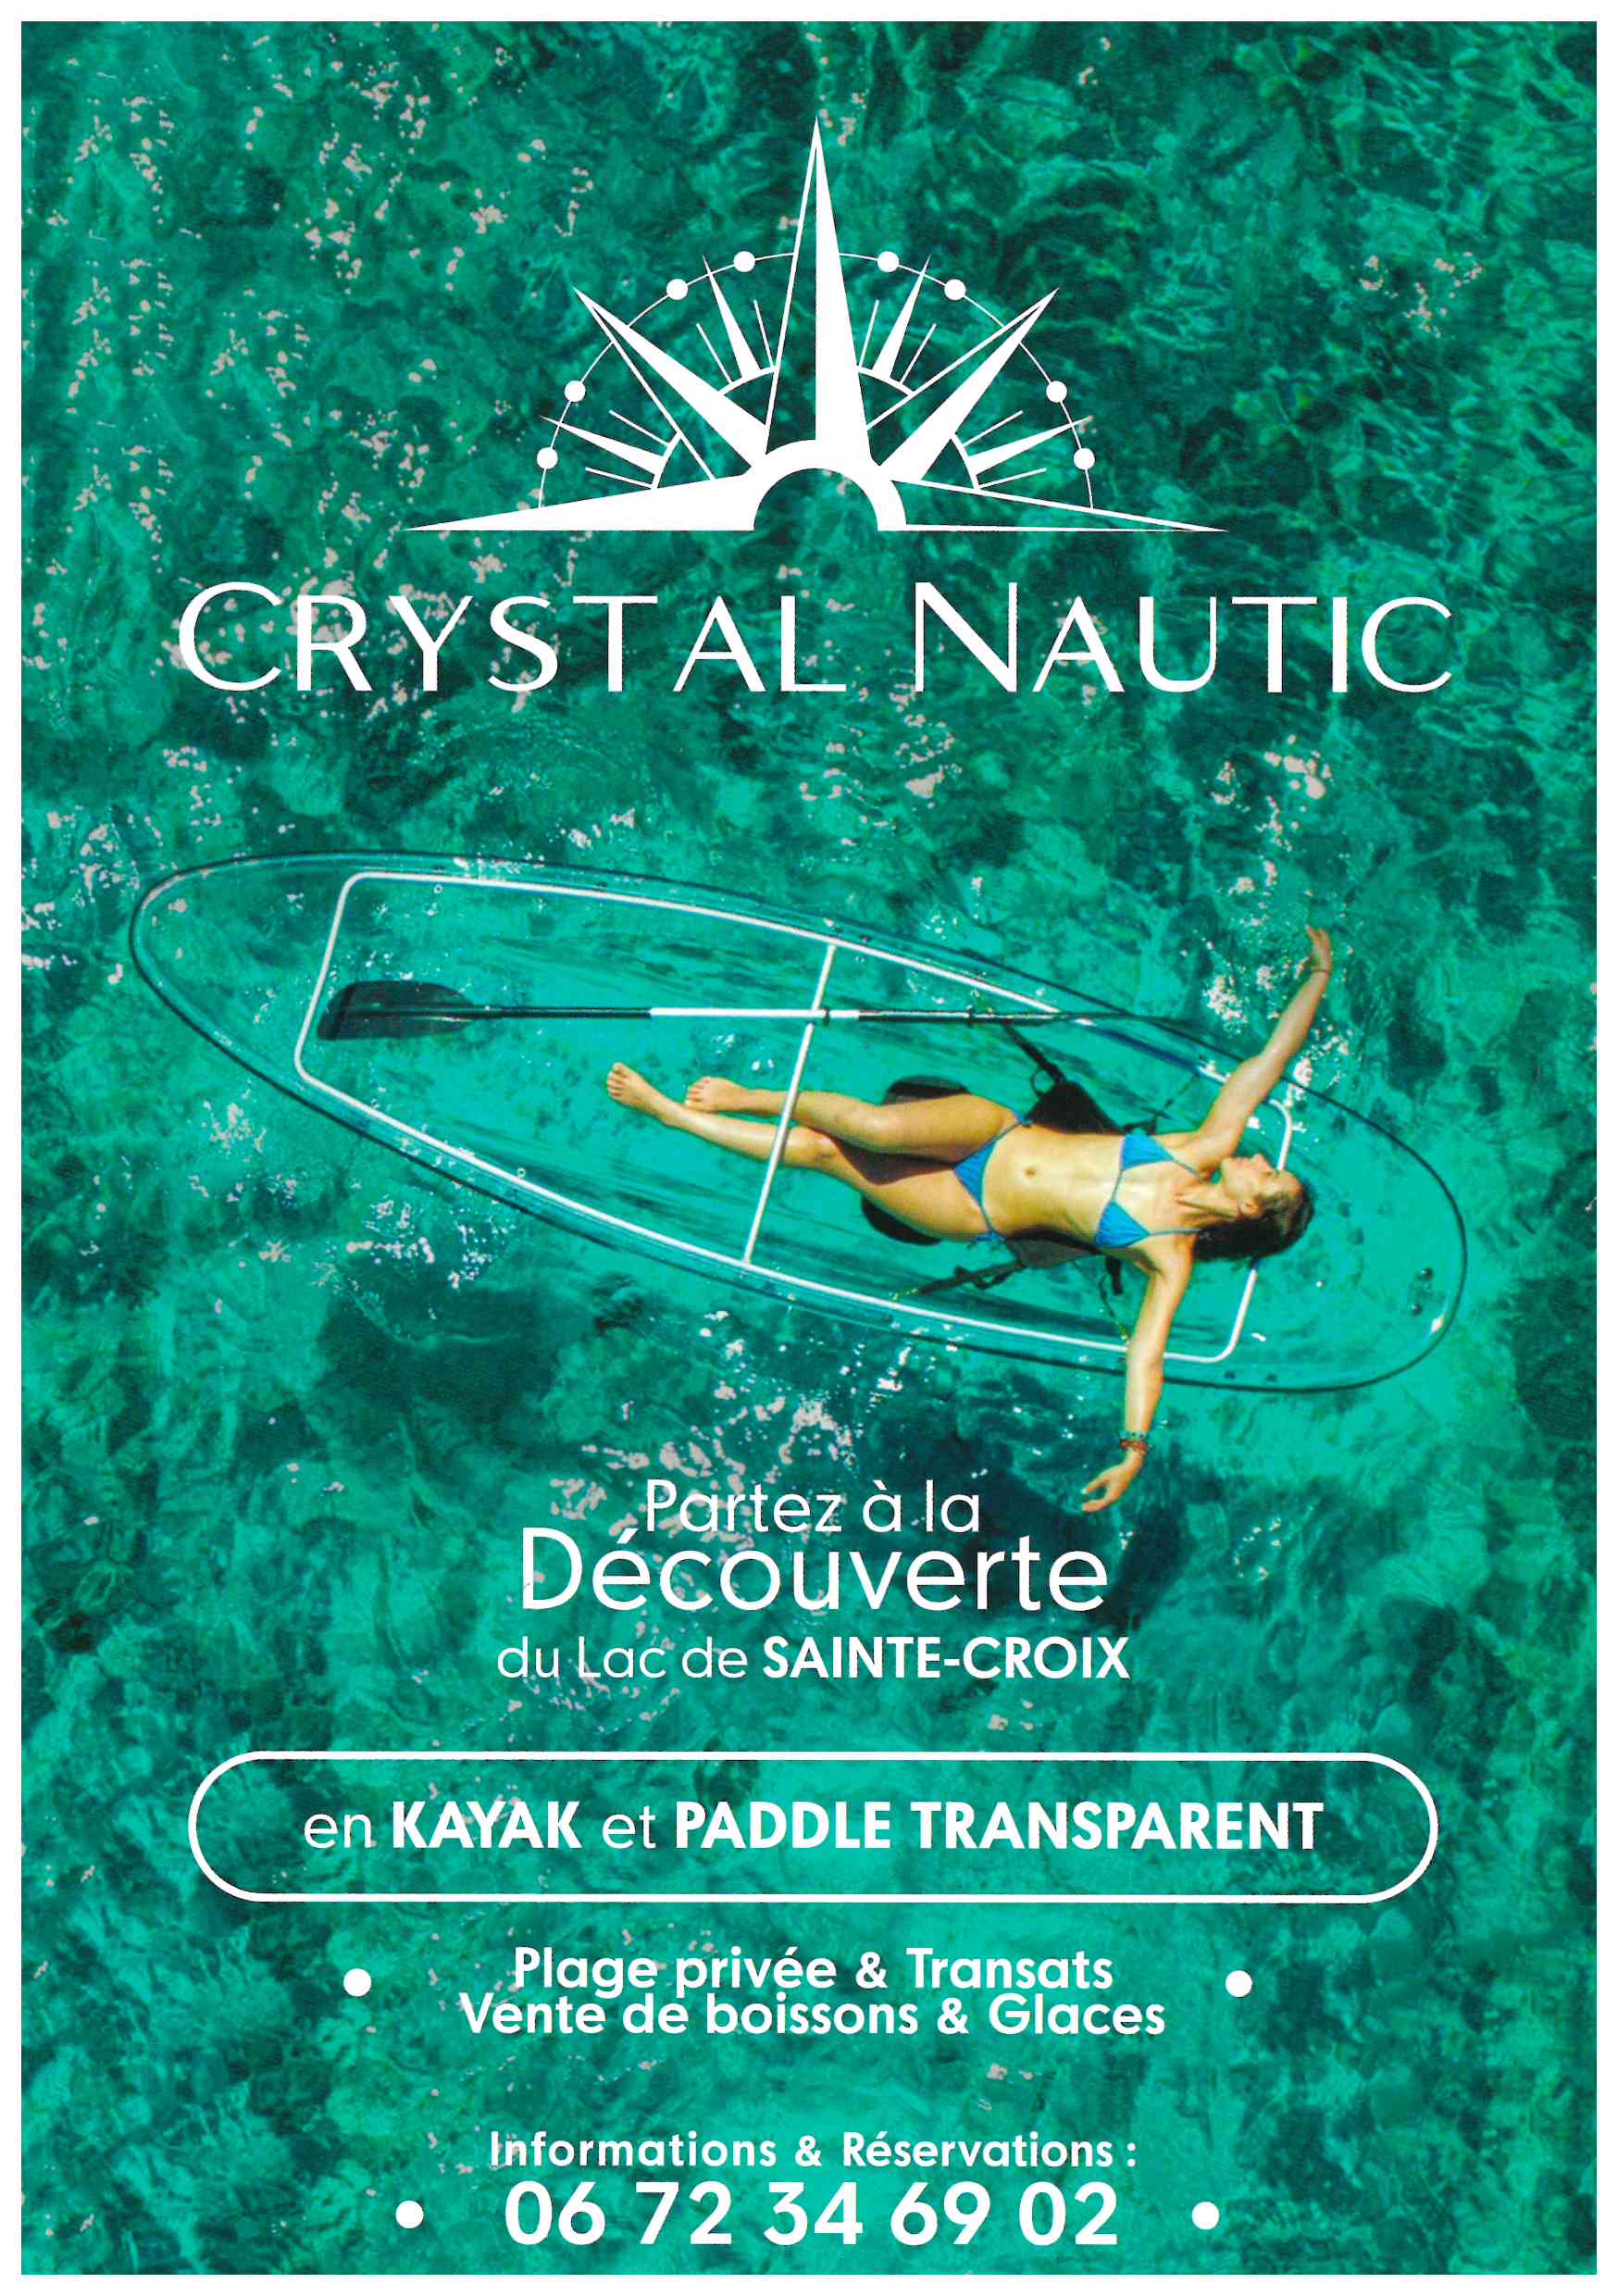 Crystal Nautic - Crystal Nautic